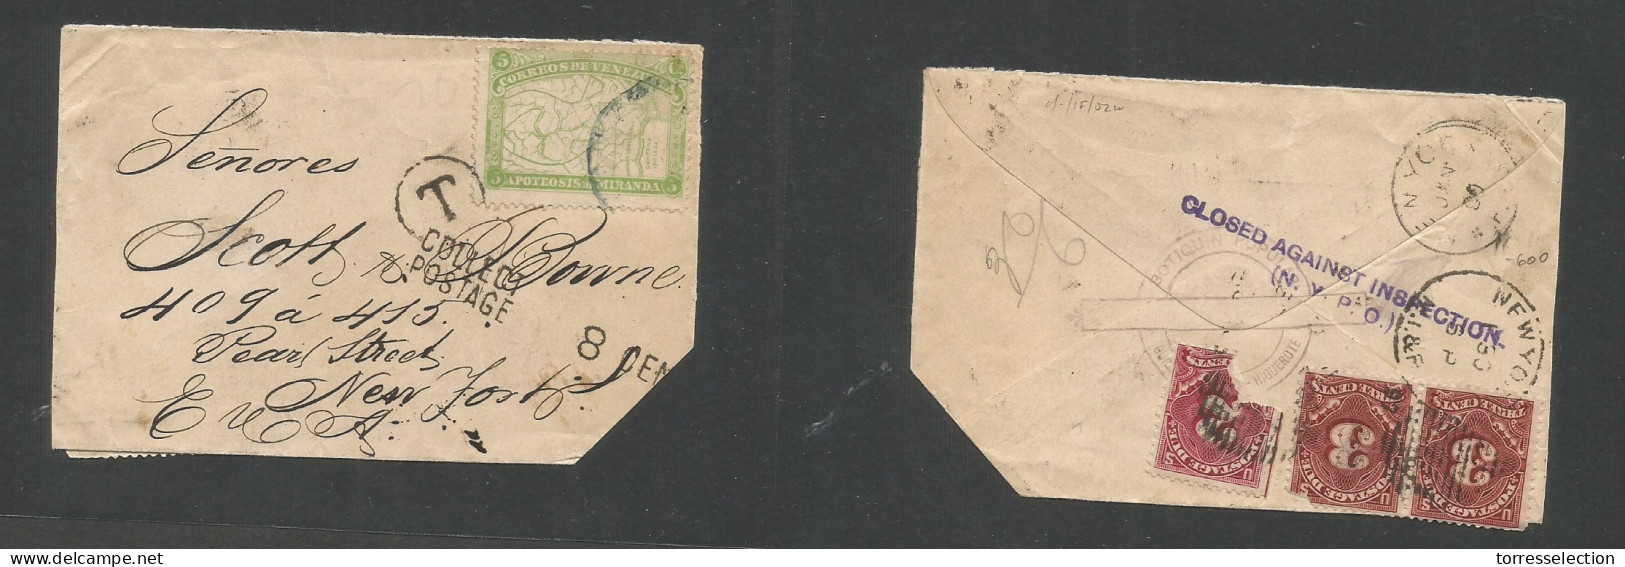 VENEZUELA. 1897. Higuerote - USA, NYC. Fkd Map Issue 5c Green, Tied Cds + "T" Cachet, P, Due 8c Reverse 8c, Tied Grill P - Venezuela